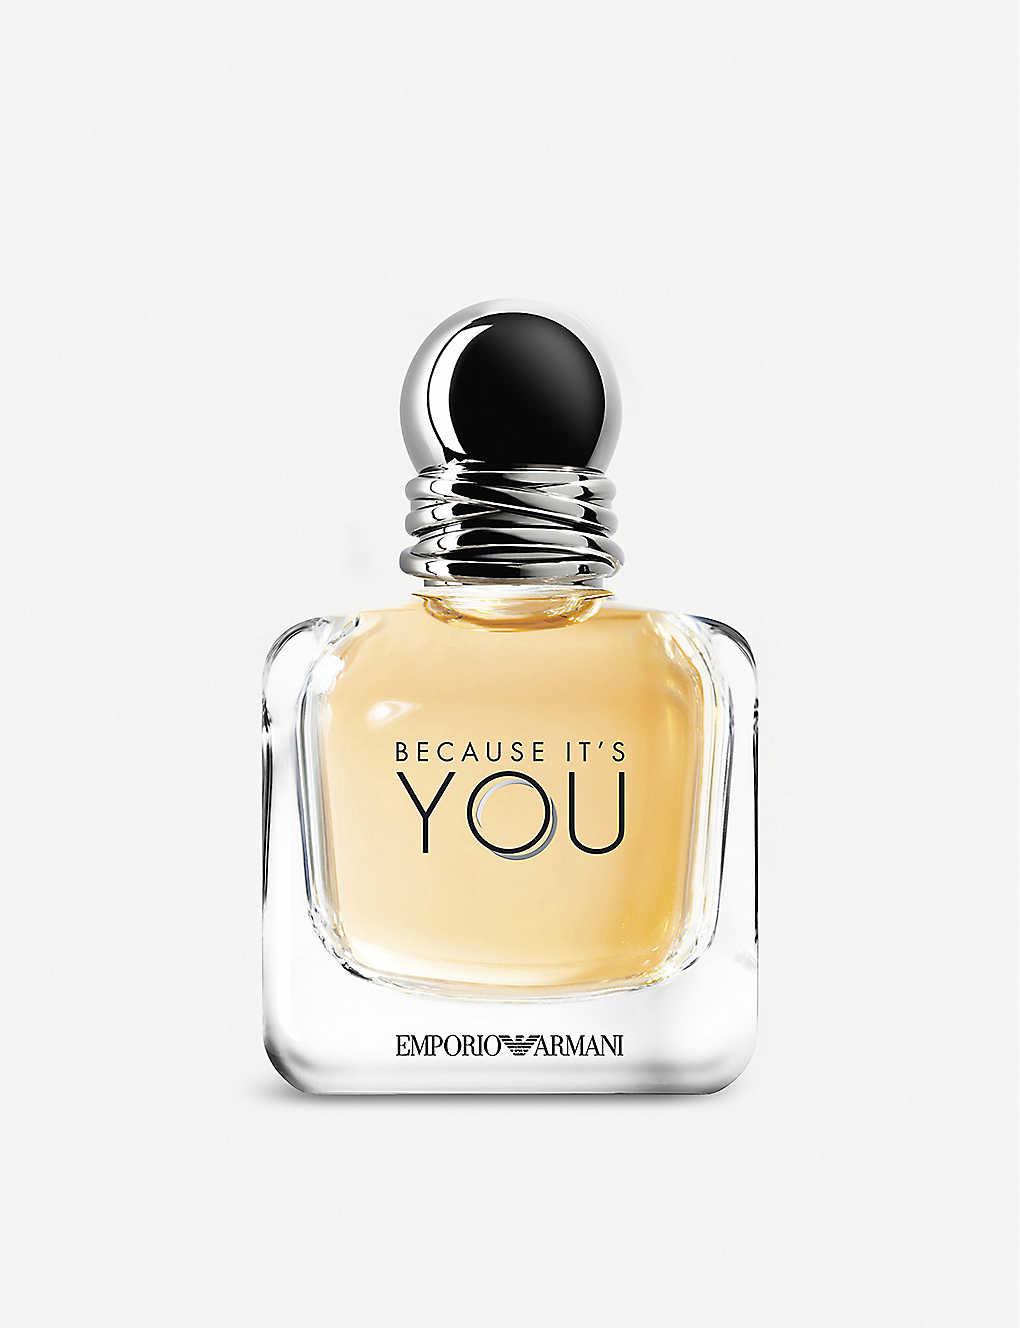 Emporio Armani Because It's You Eau De Parfum 3 oz